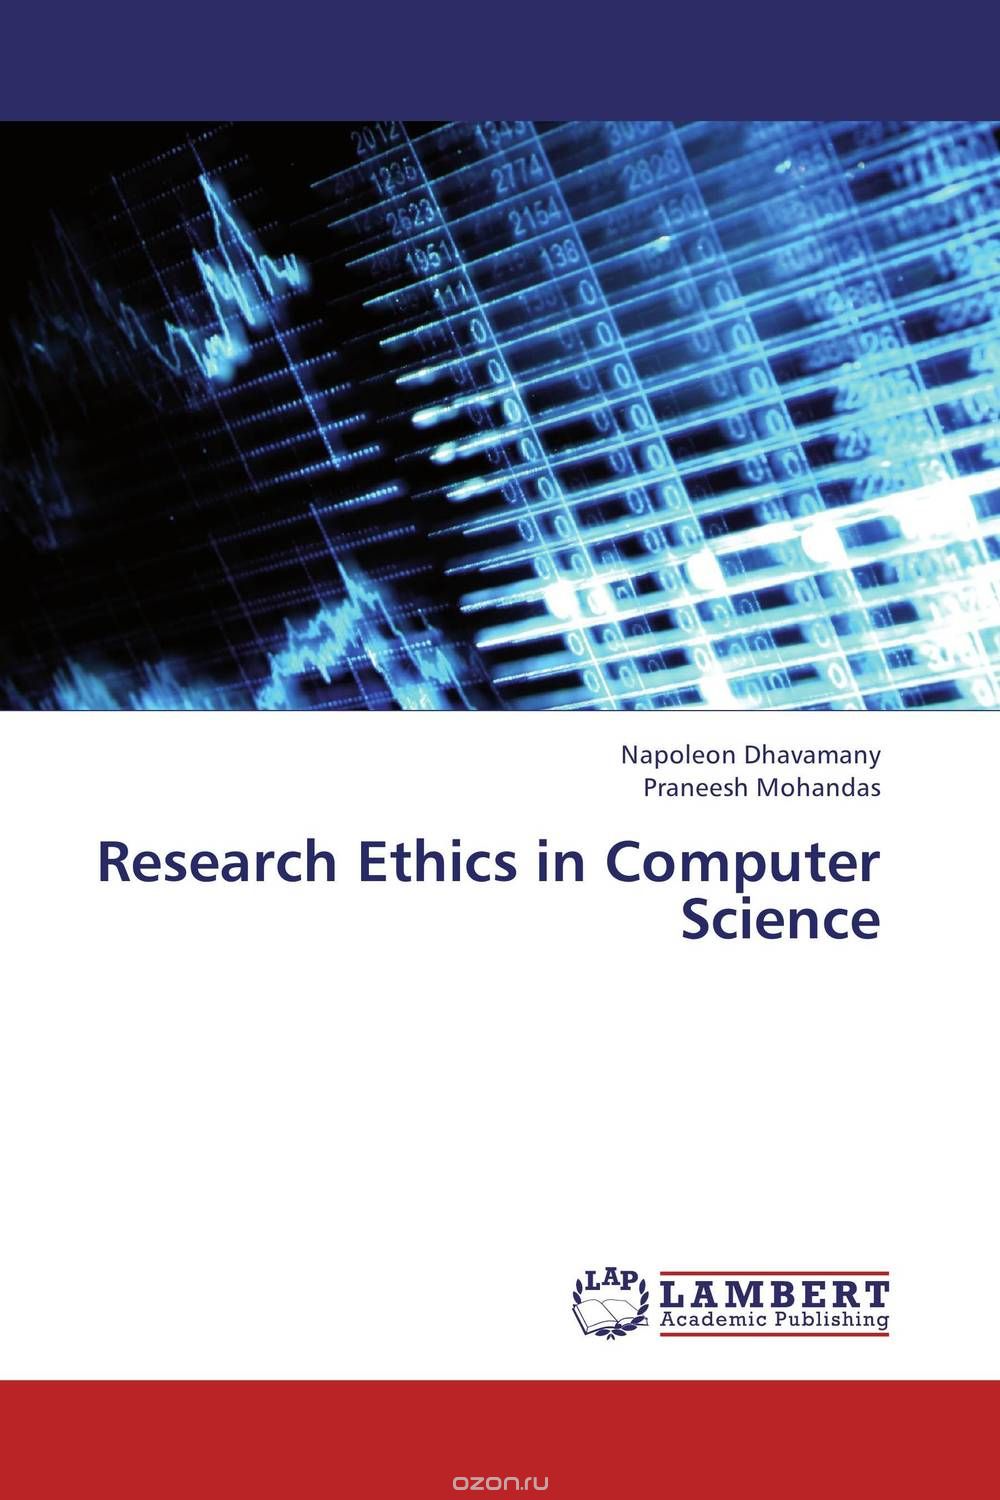 Скачать книгу "Research Ethics in Computer Science"